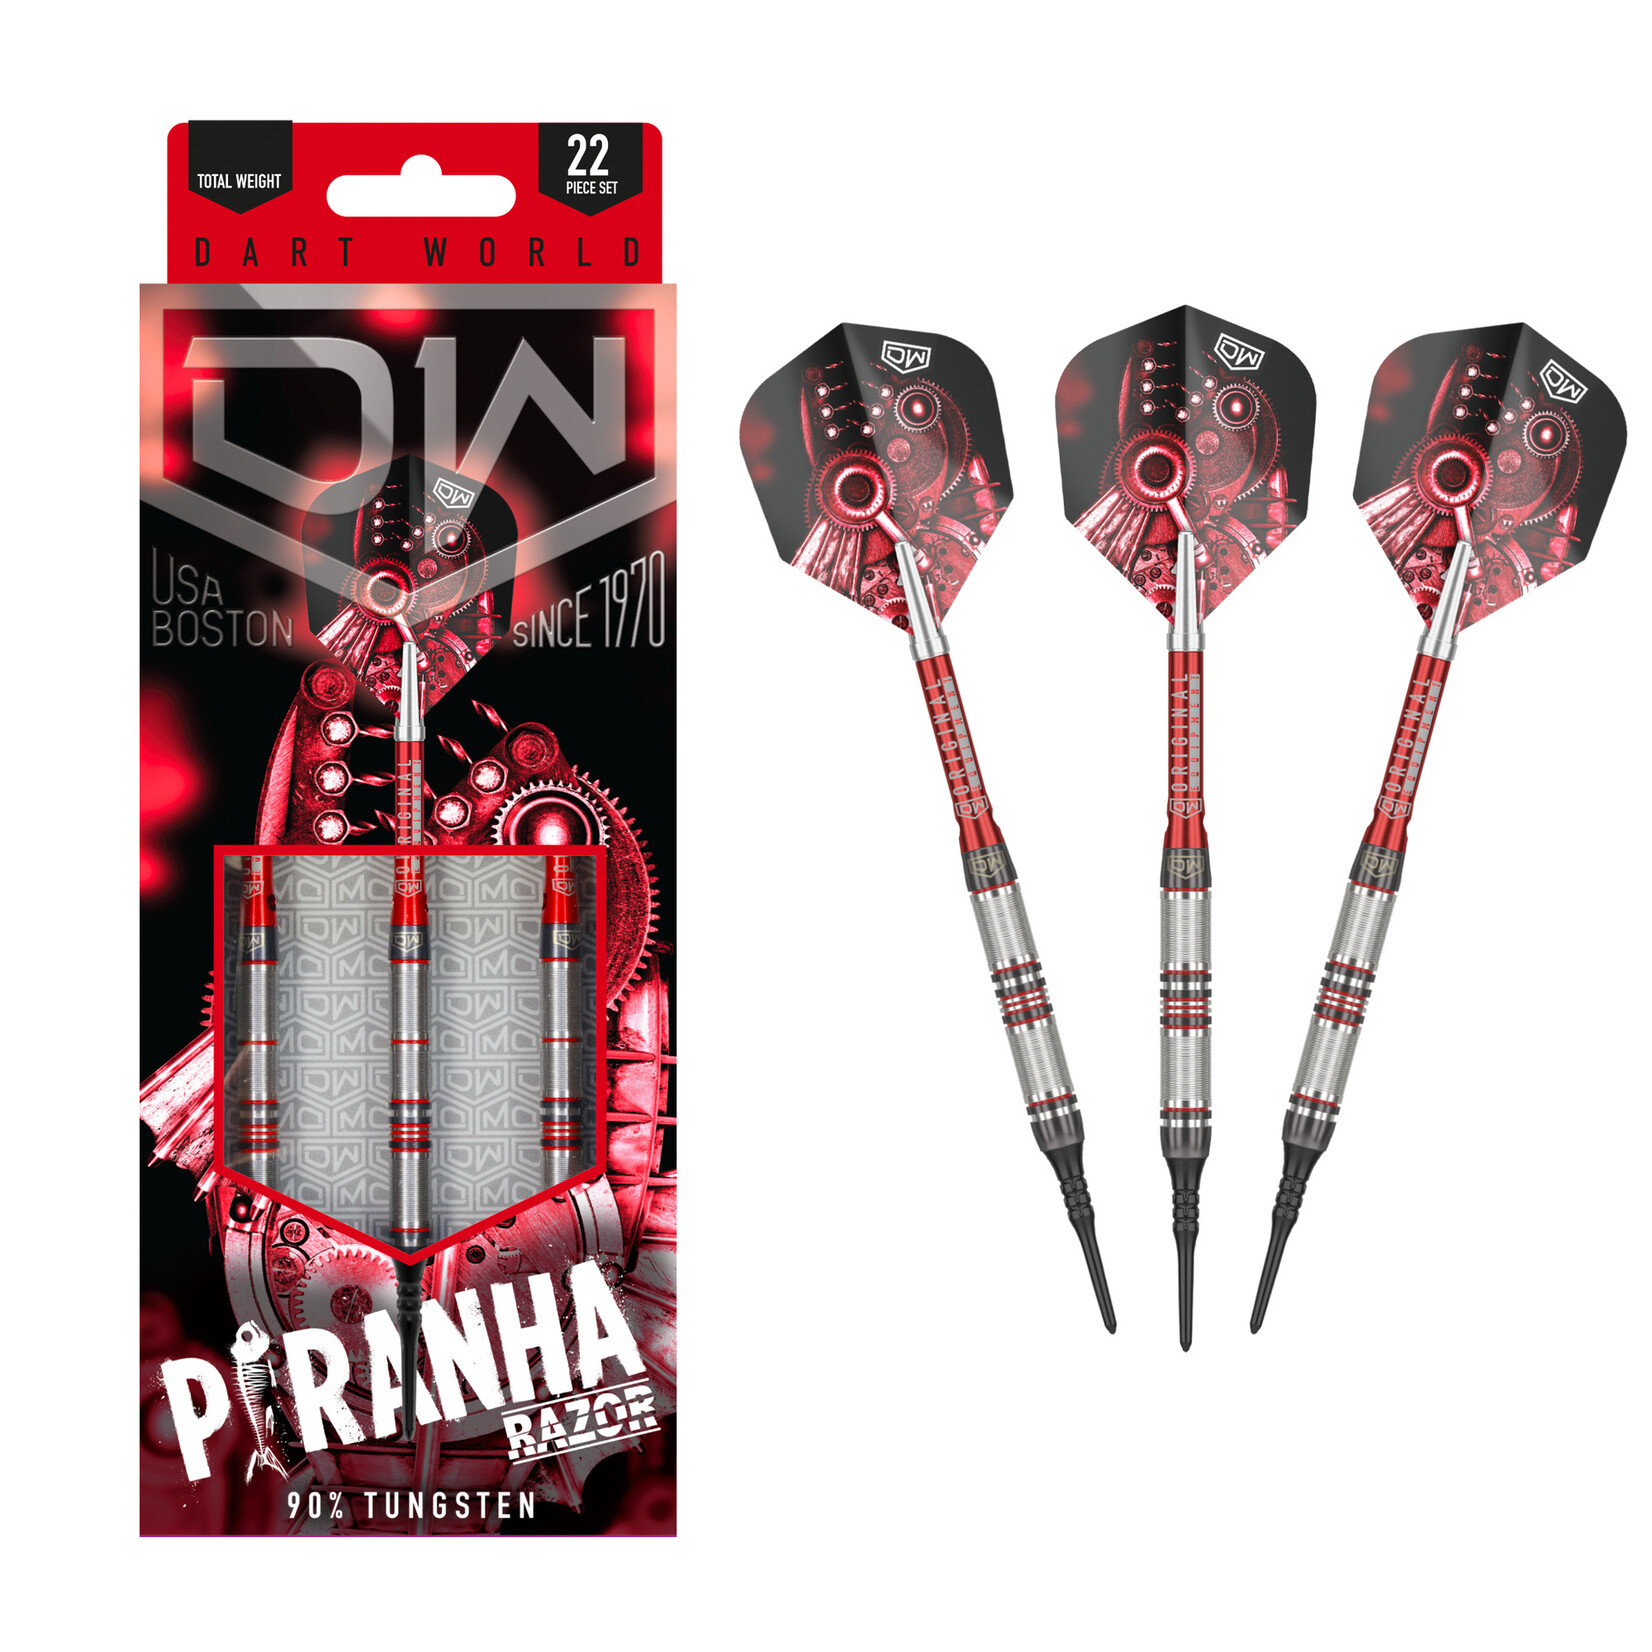 Dart World Dart World Pirhana Razor S1 Soft Tip Darts